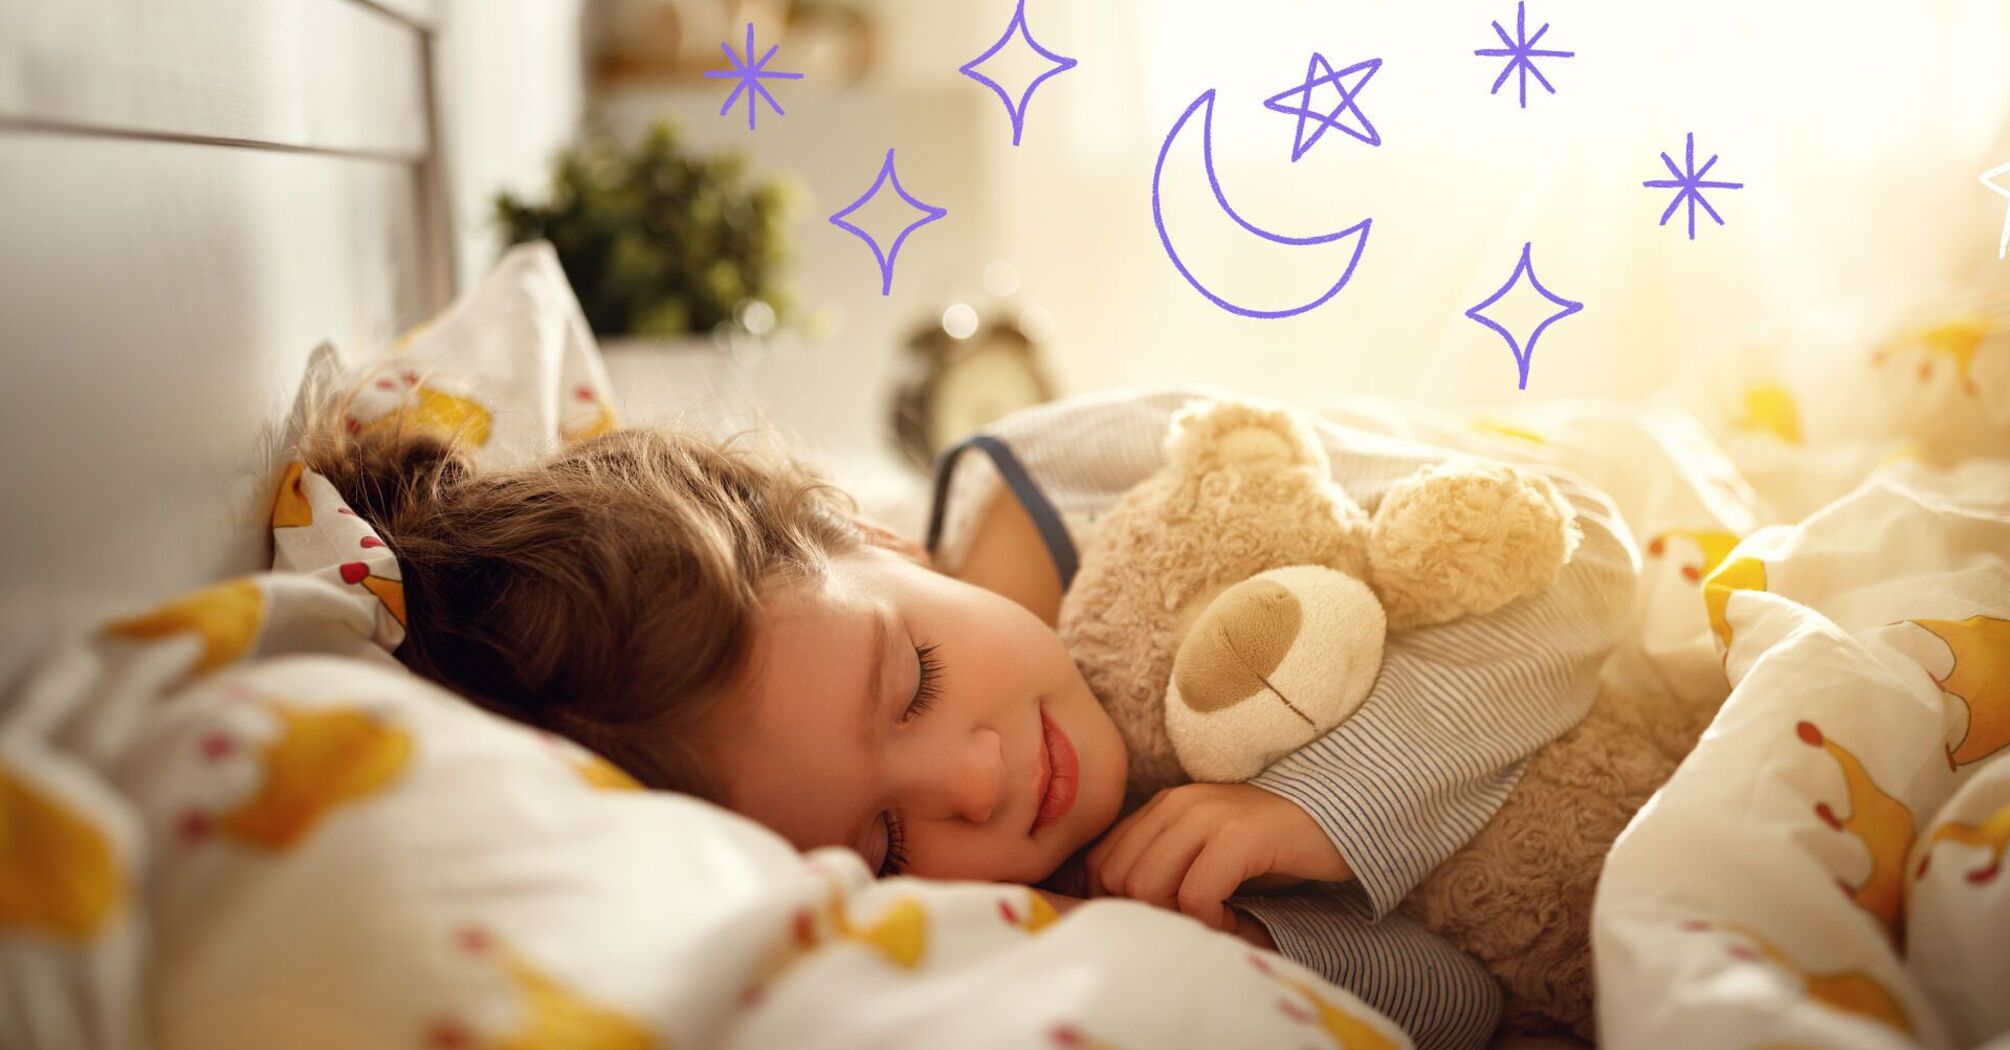 How to establish your child's sleep schedule after summerHow to establish your child's sleep schedule